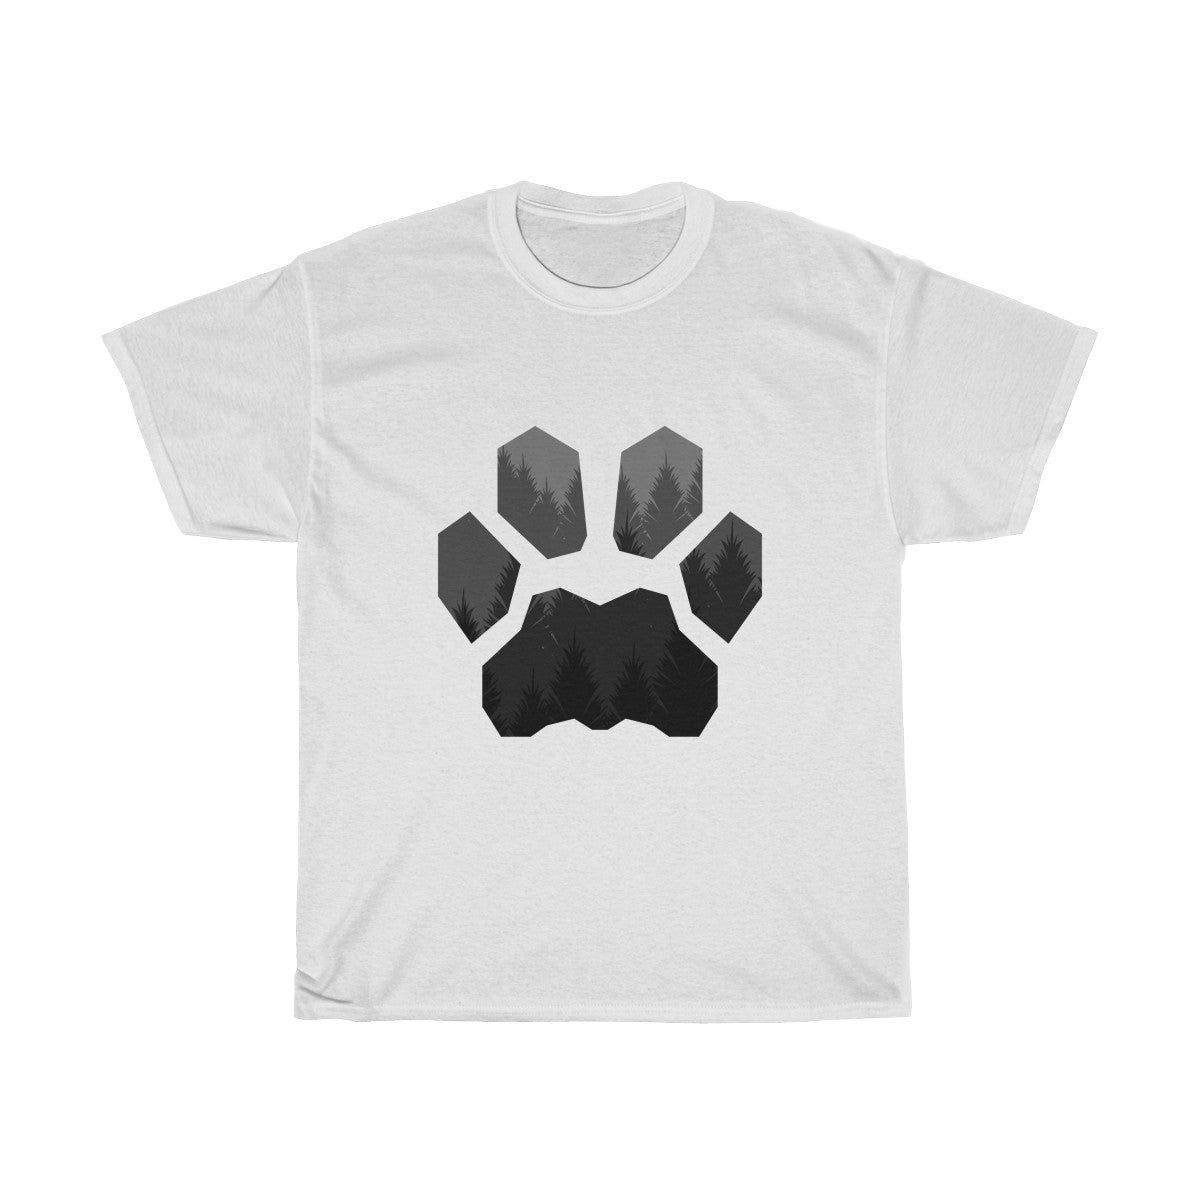 Forest Feline - T-Shirt T-Shirt Wexon White S 